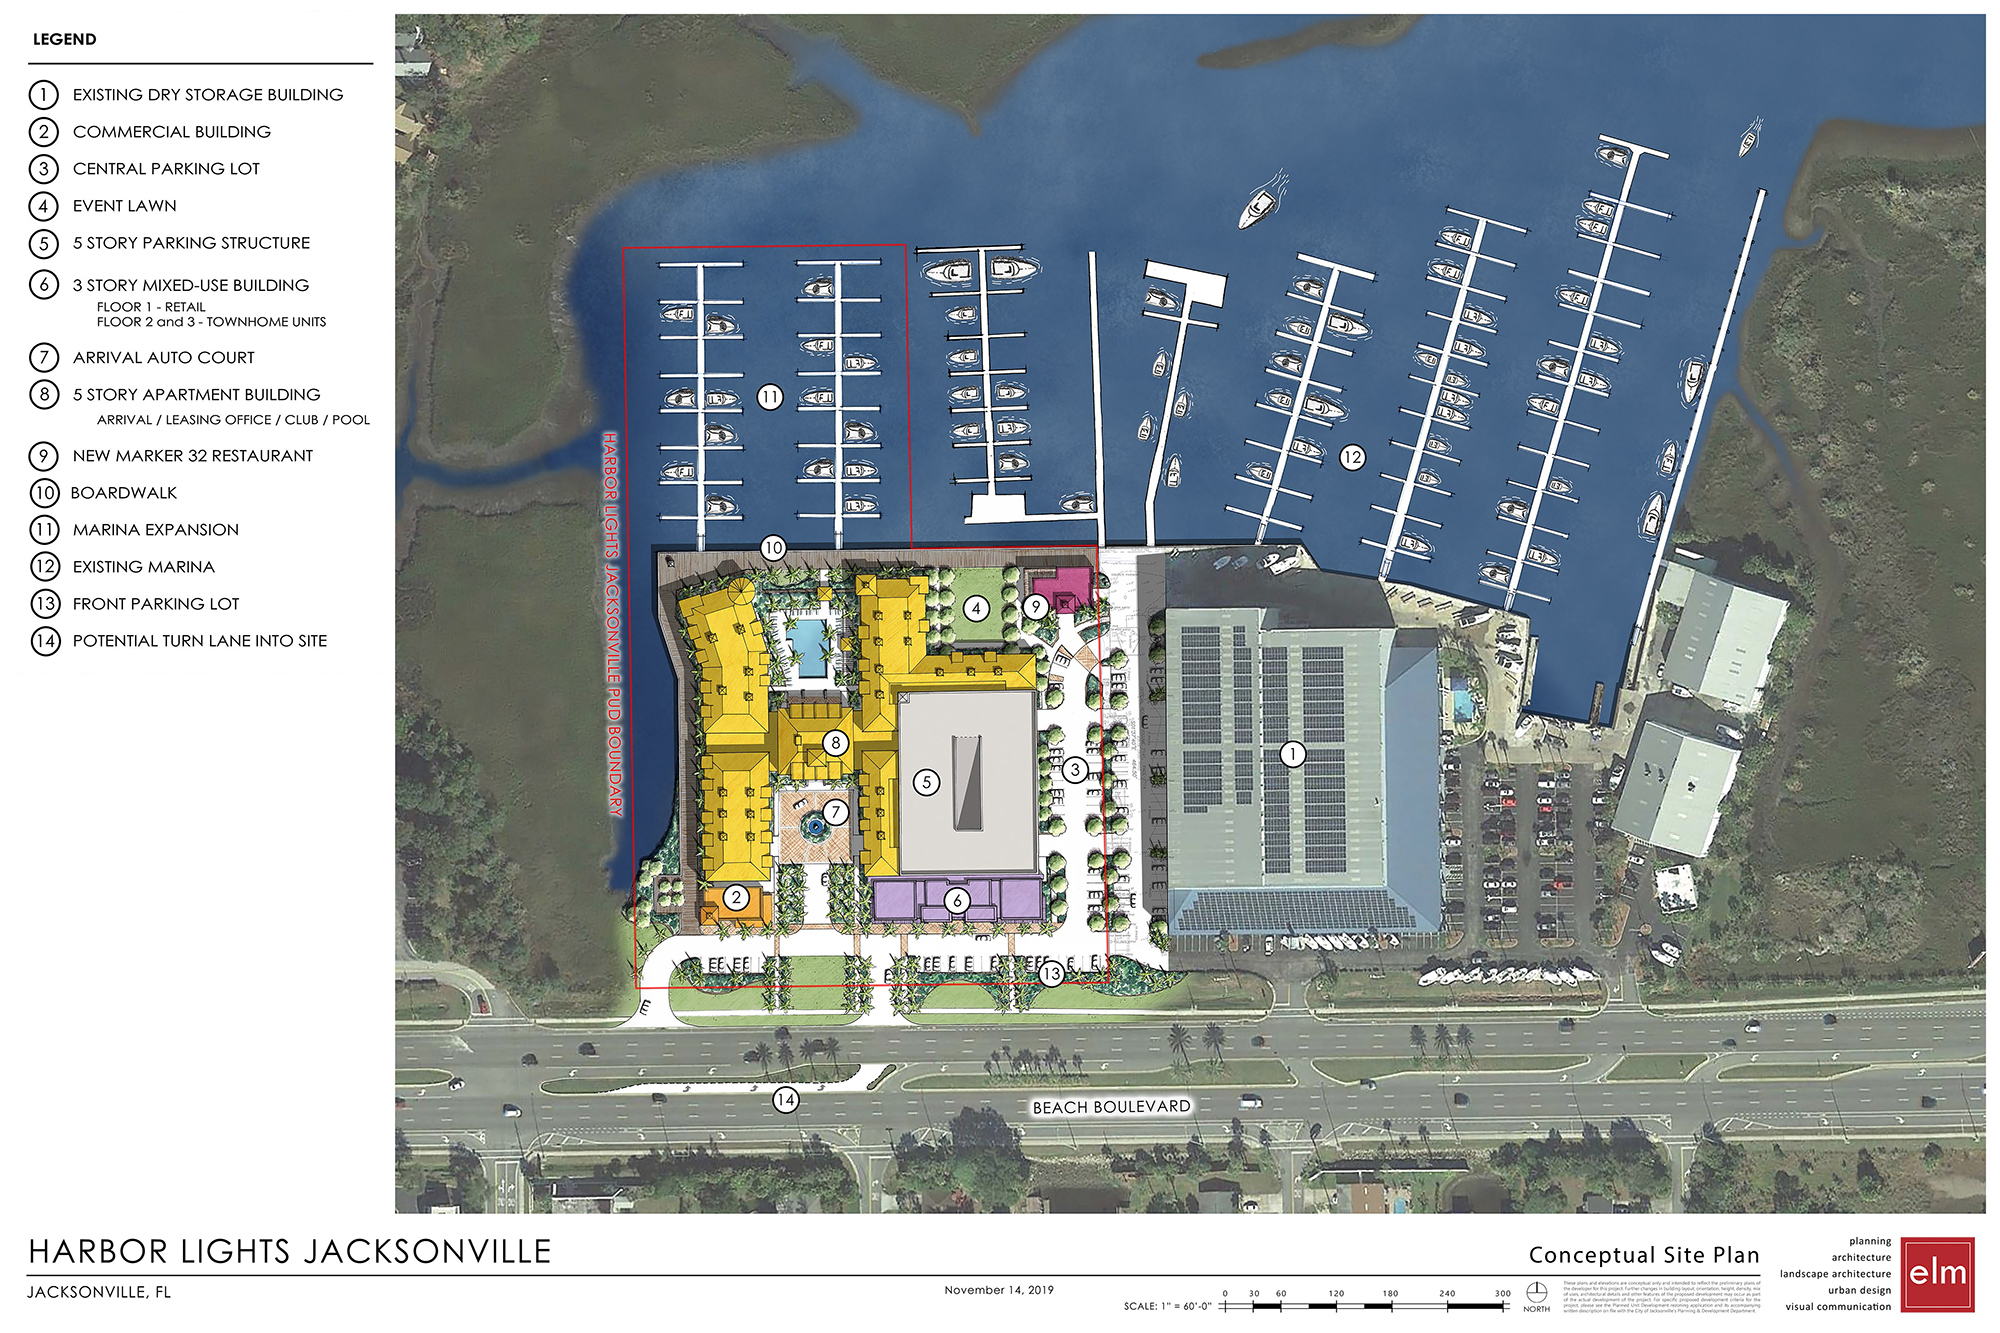 The site plan for Harbor Lights Jacksonville.